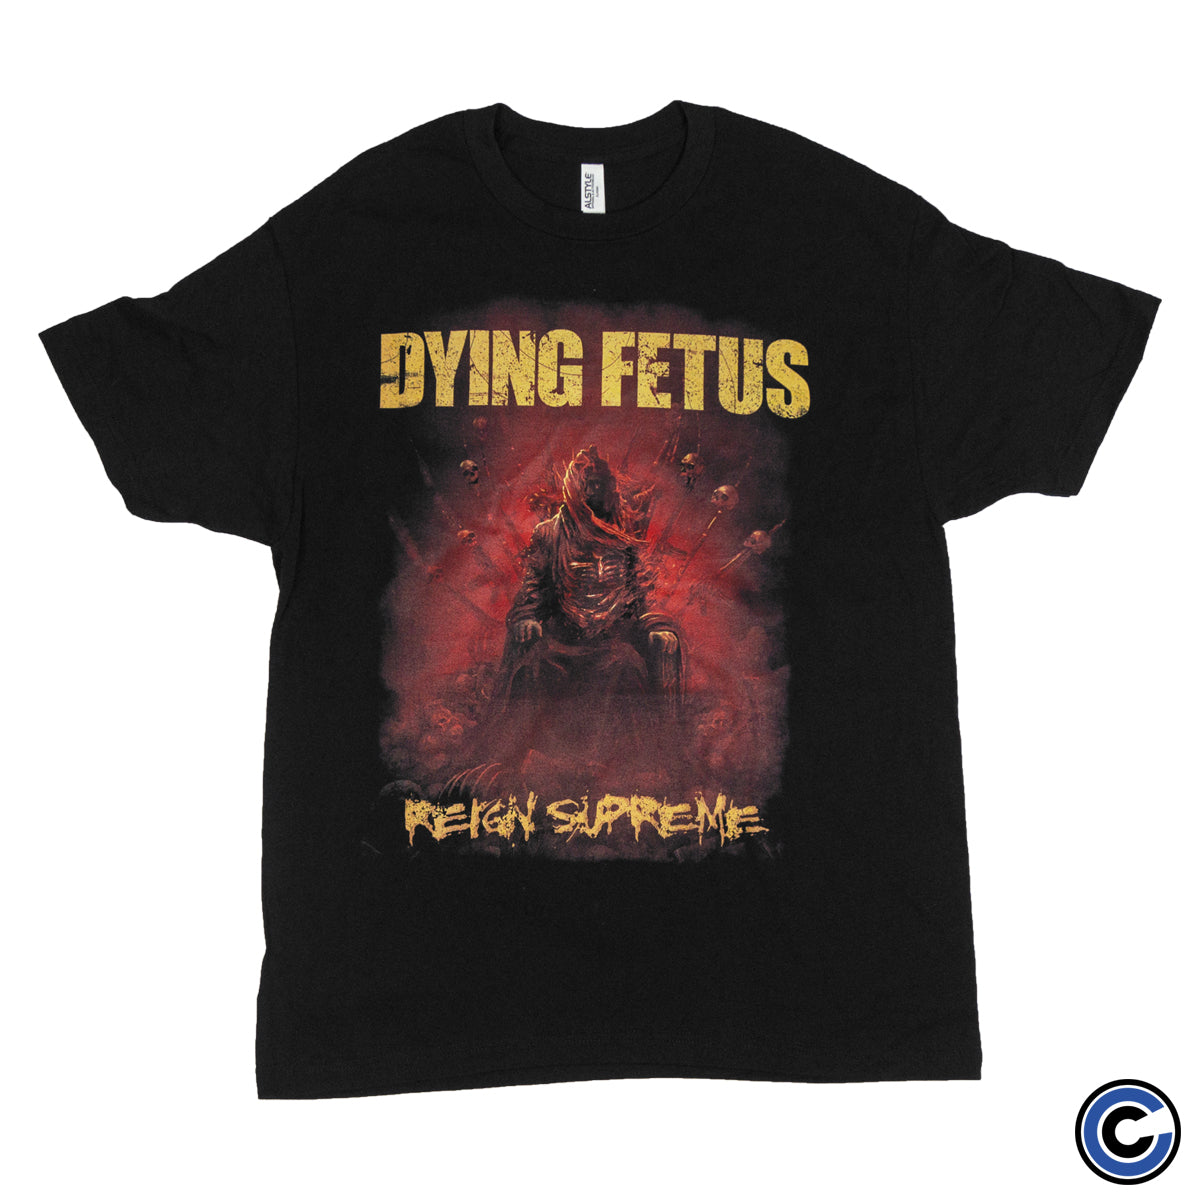 Dying Fetus "Reign Supreme" Shirt